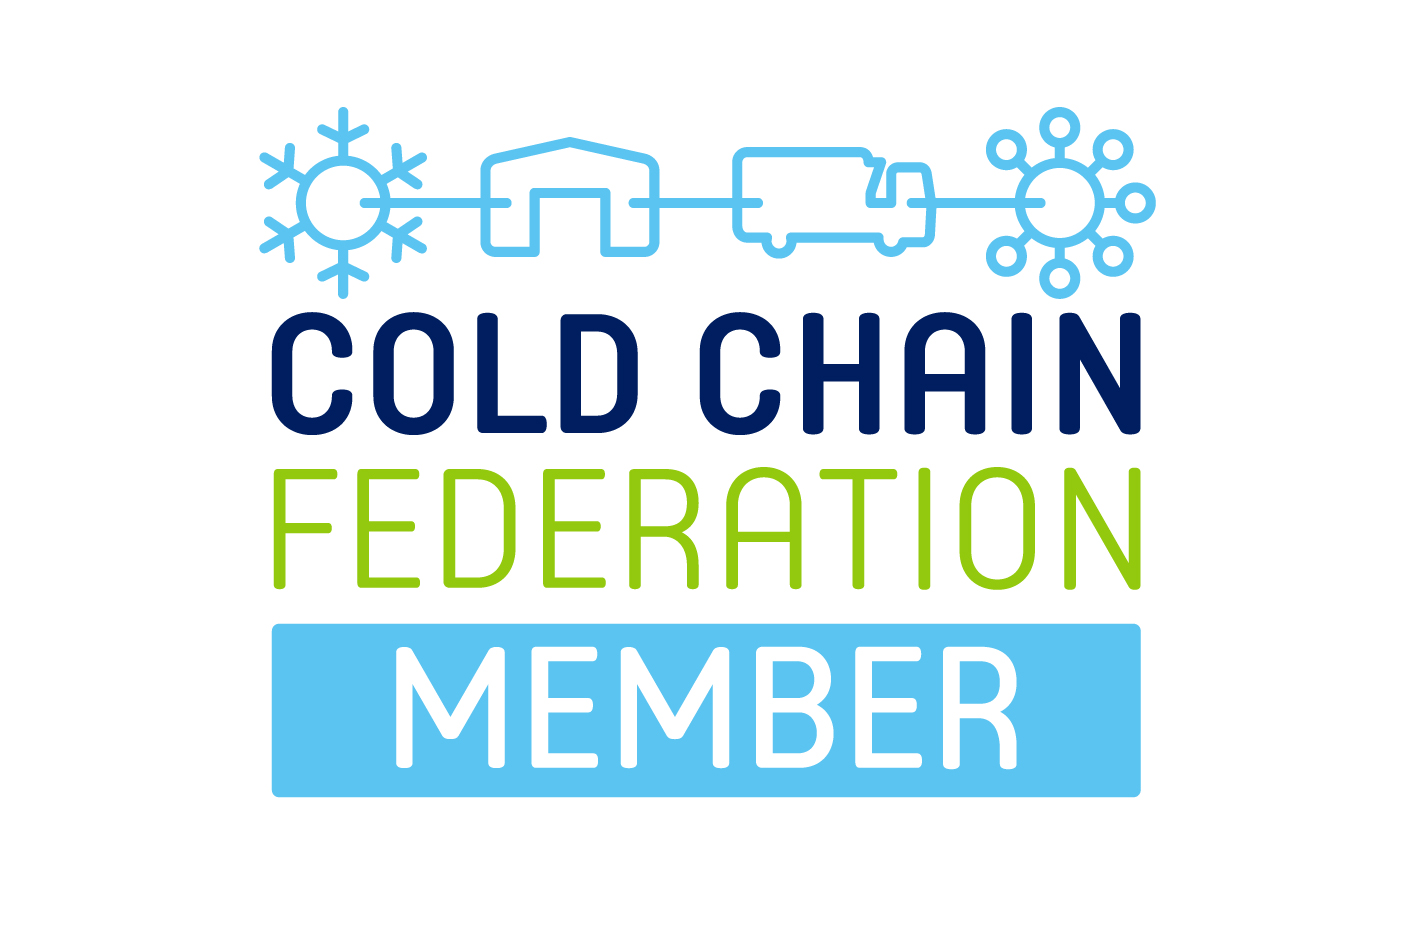 Cold chain federation logo